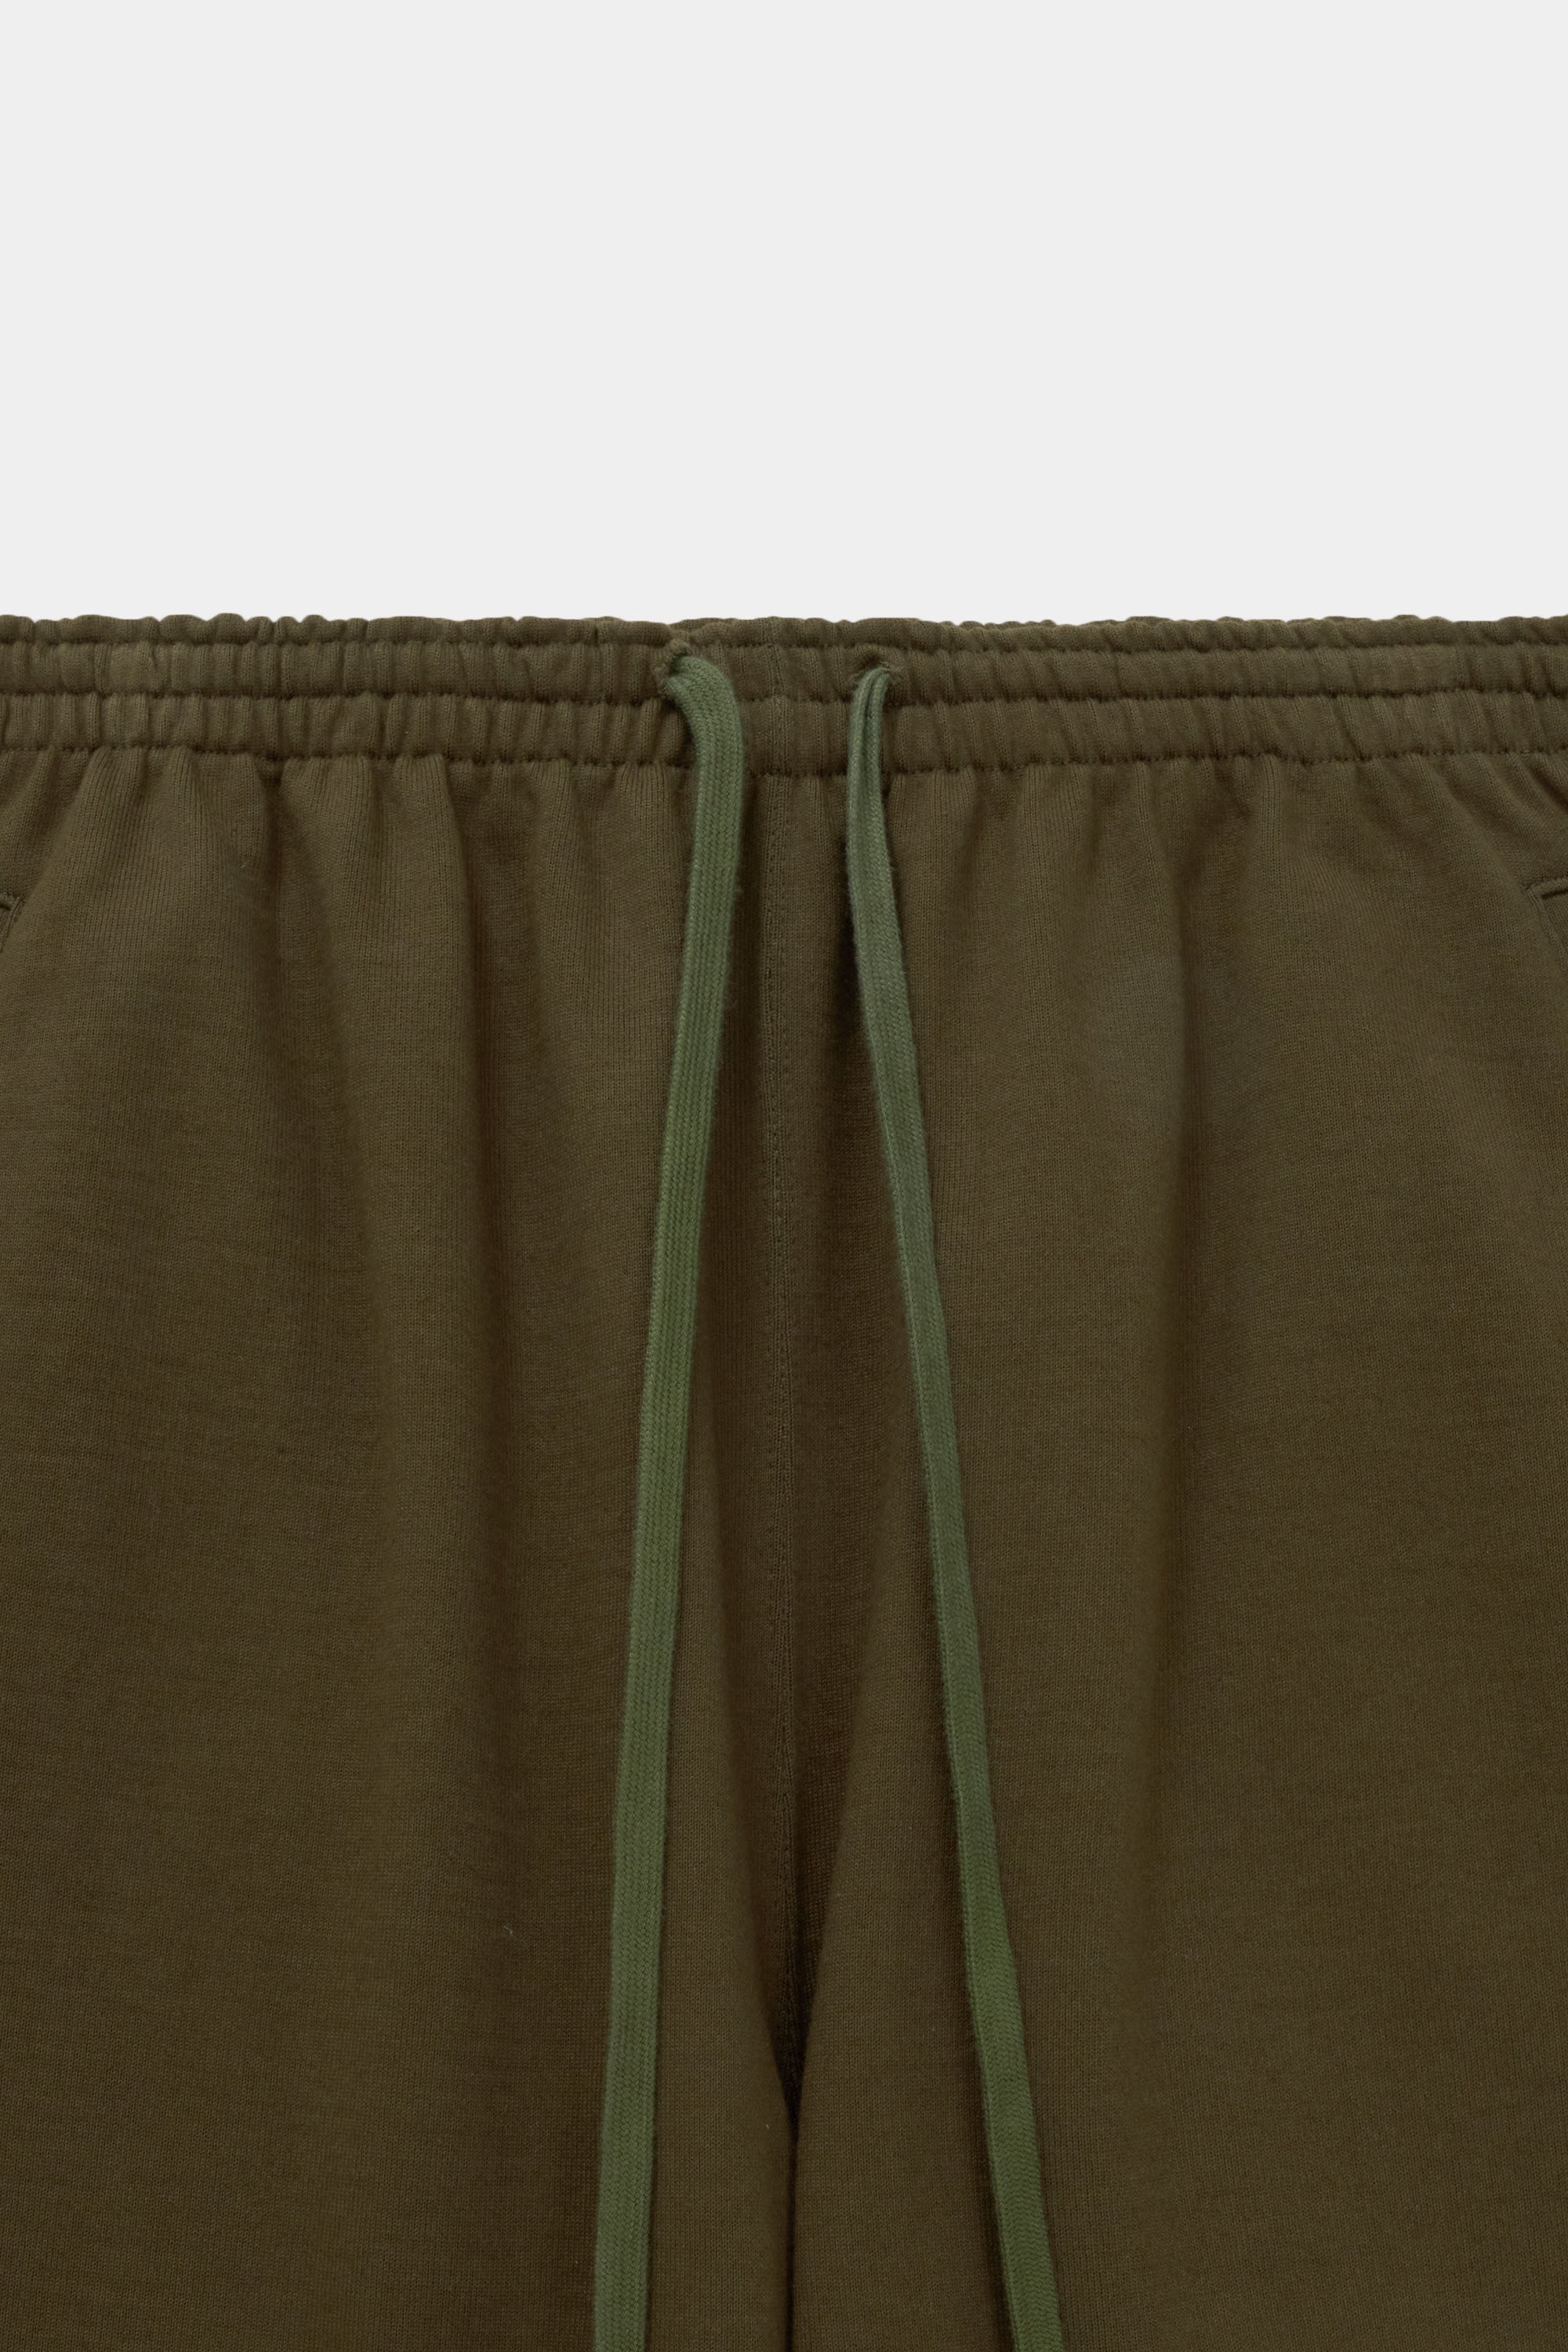 Organic Cotton Heavy Fleece Gym Pants, Dark Green